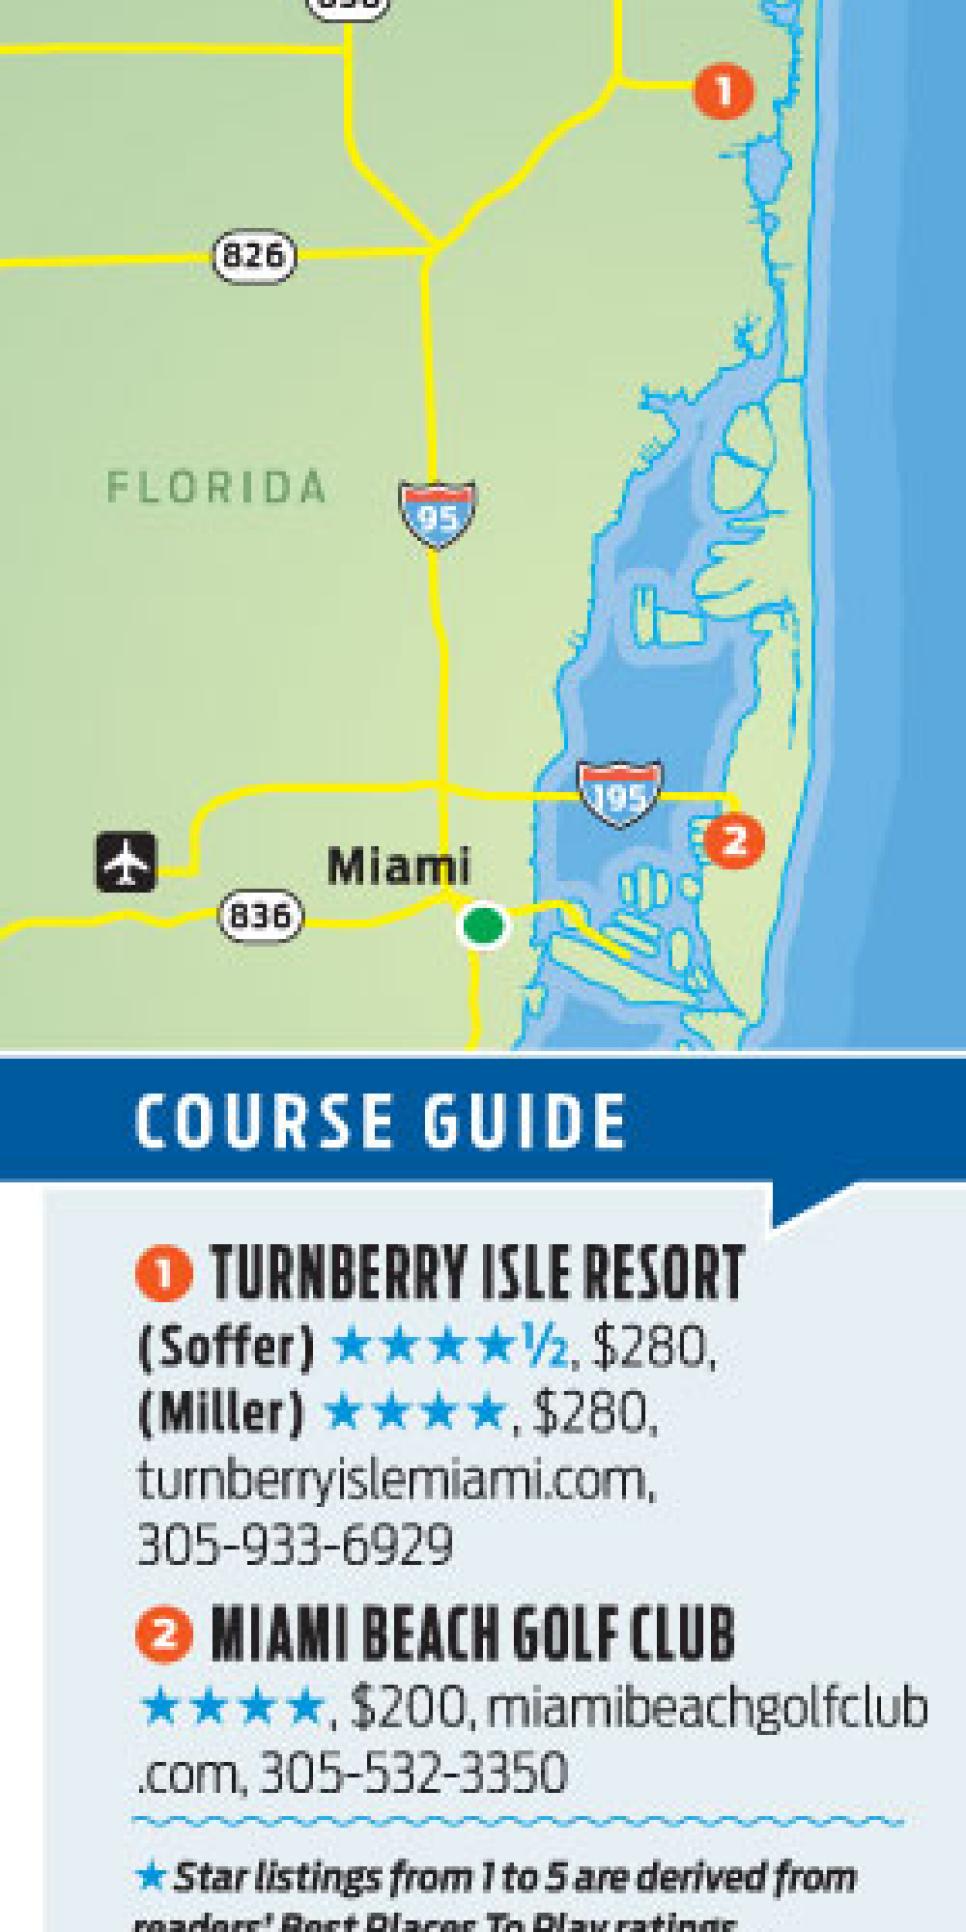 courses-2013-05-coar03-away-game-south-florida.jpg